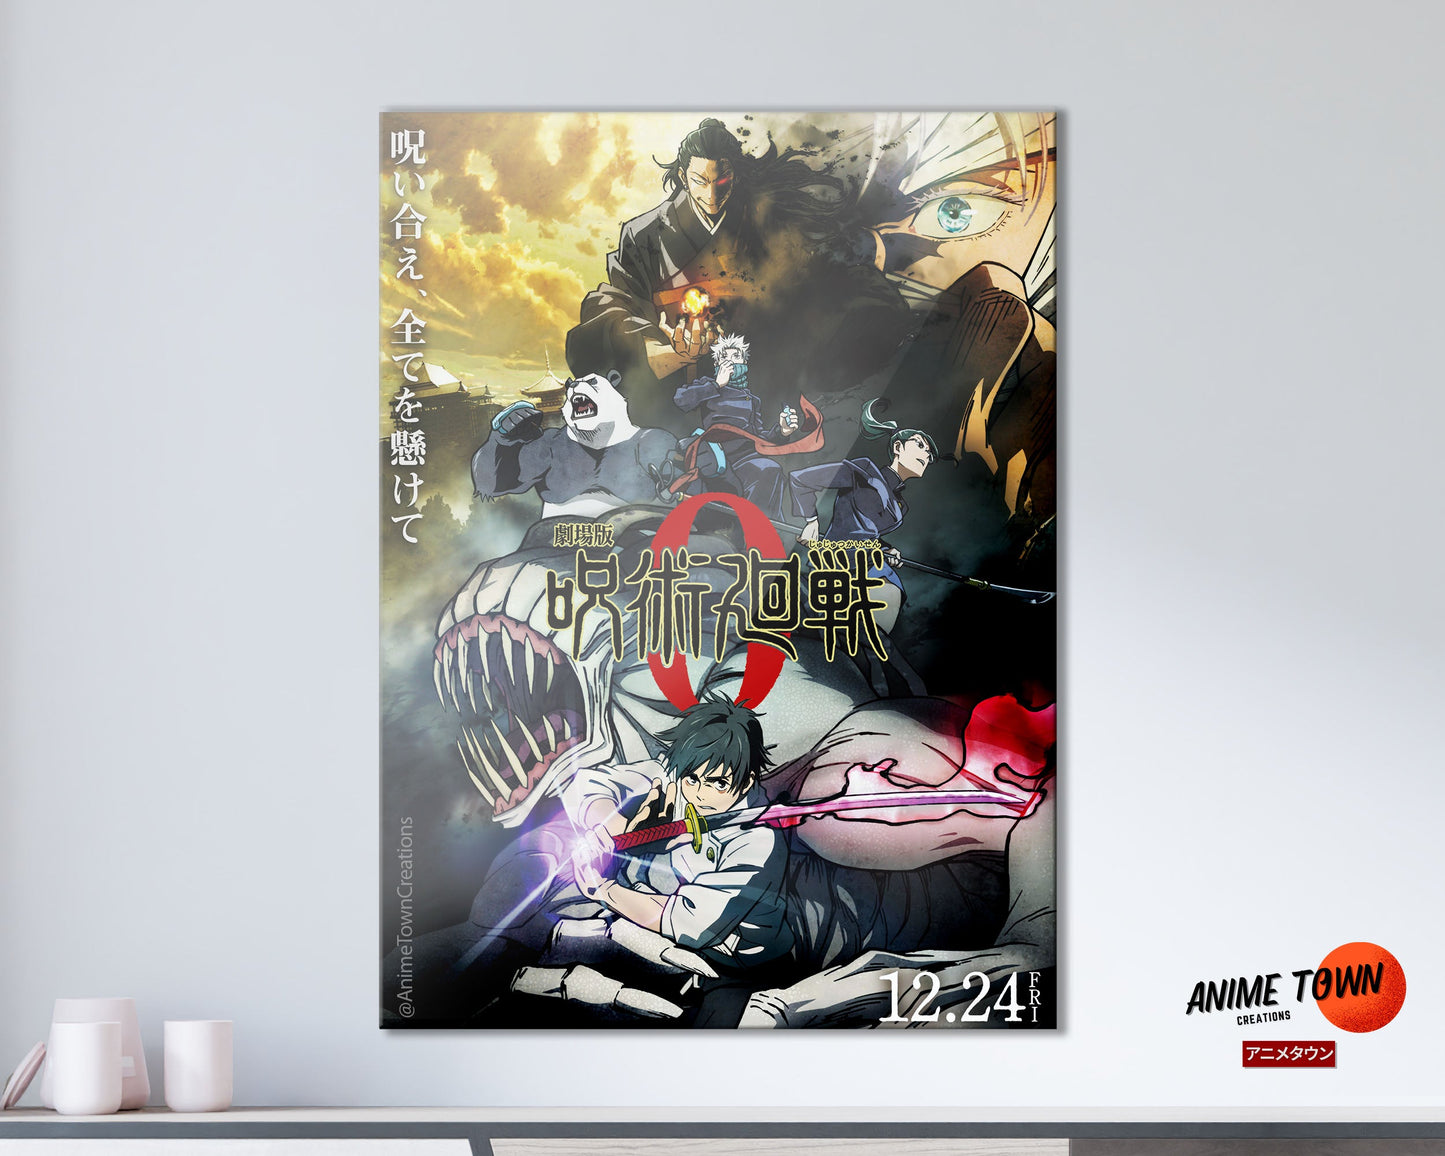 Anime Town Creations Metal Poster Jujutsu Kaisen 0 The Prequel 11" x 17" Home Goods - Anime Jujutsu Kaisen Metal Poster